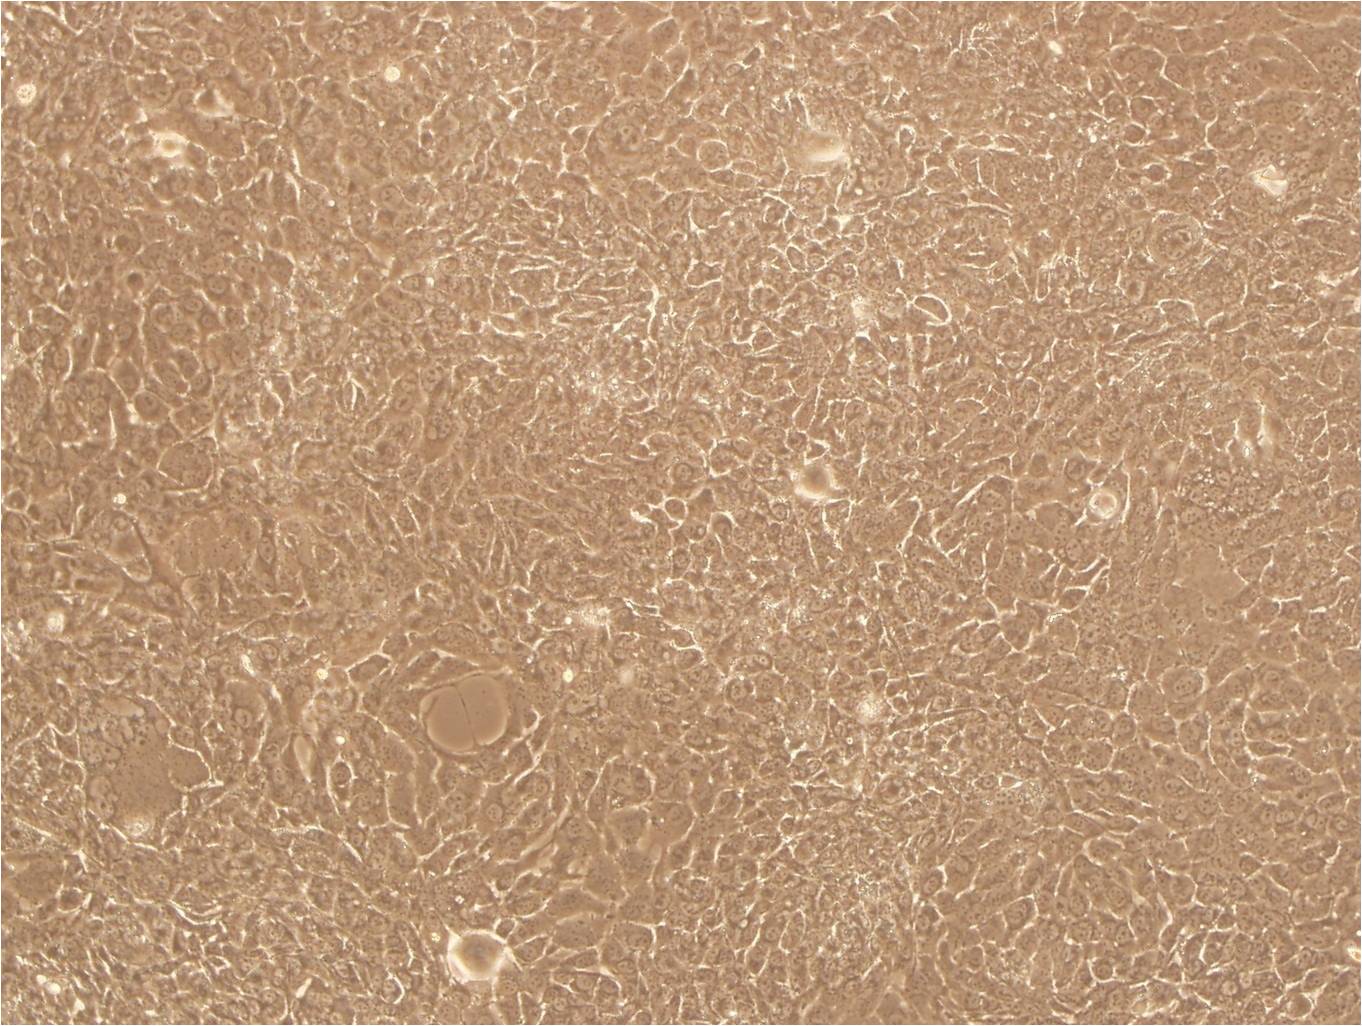 Rca-B Cell|大鼠鳞癌细胞,Rca-B Cell